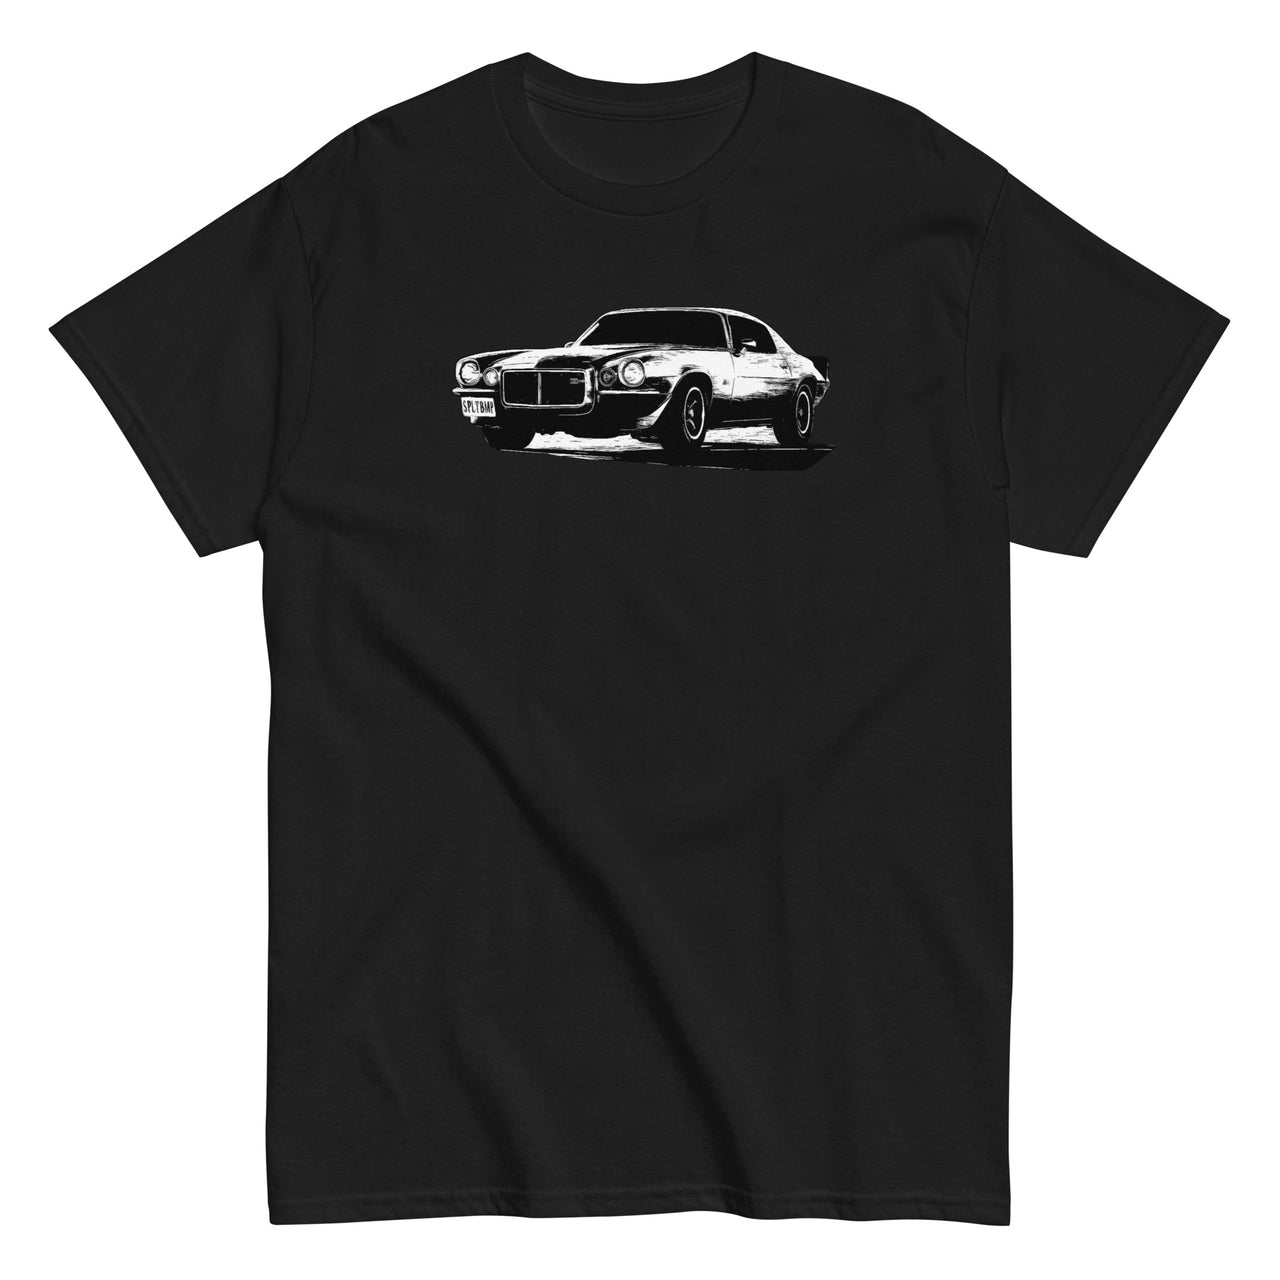 73 Camaro T-Shirt in black